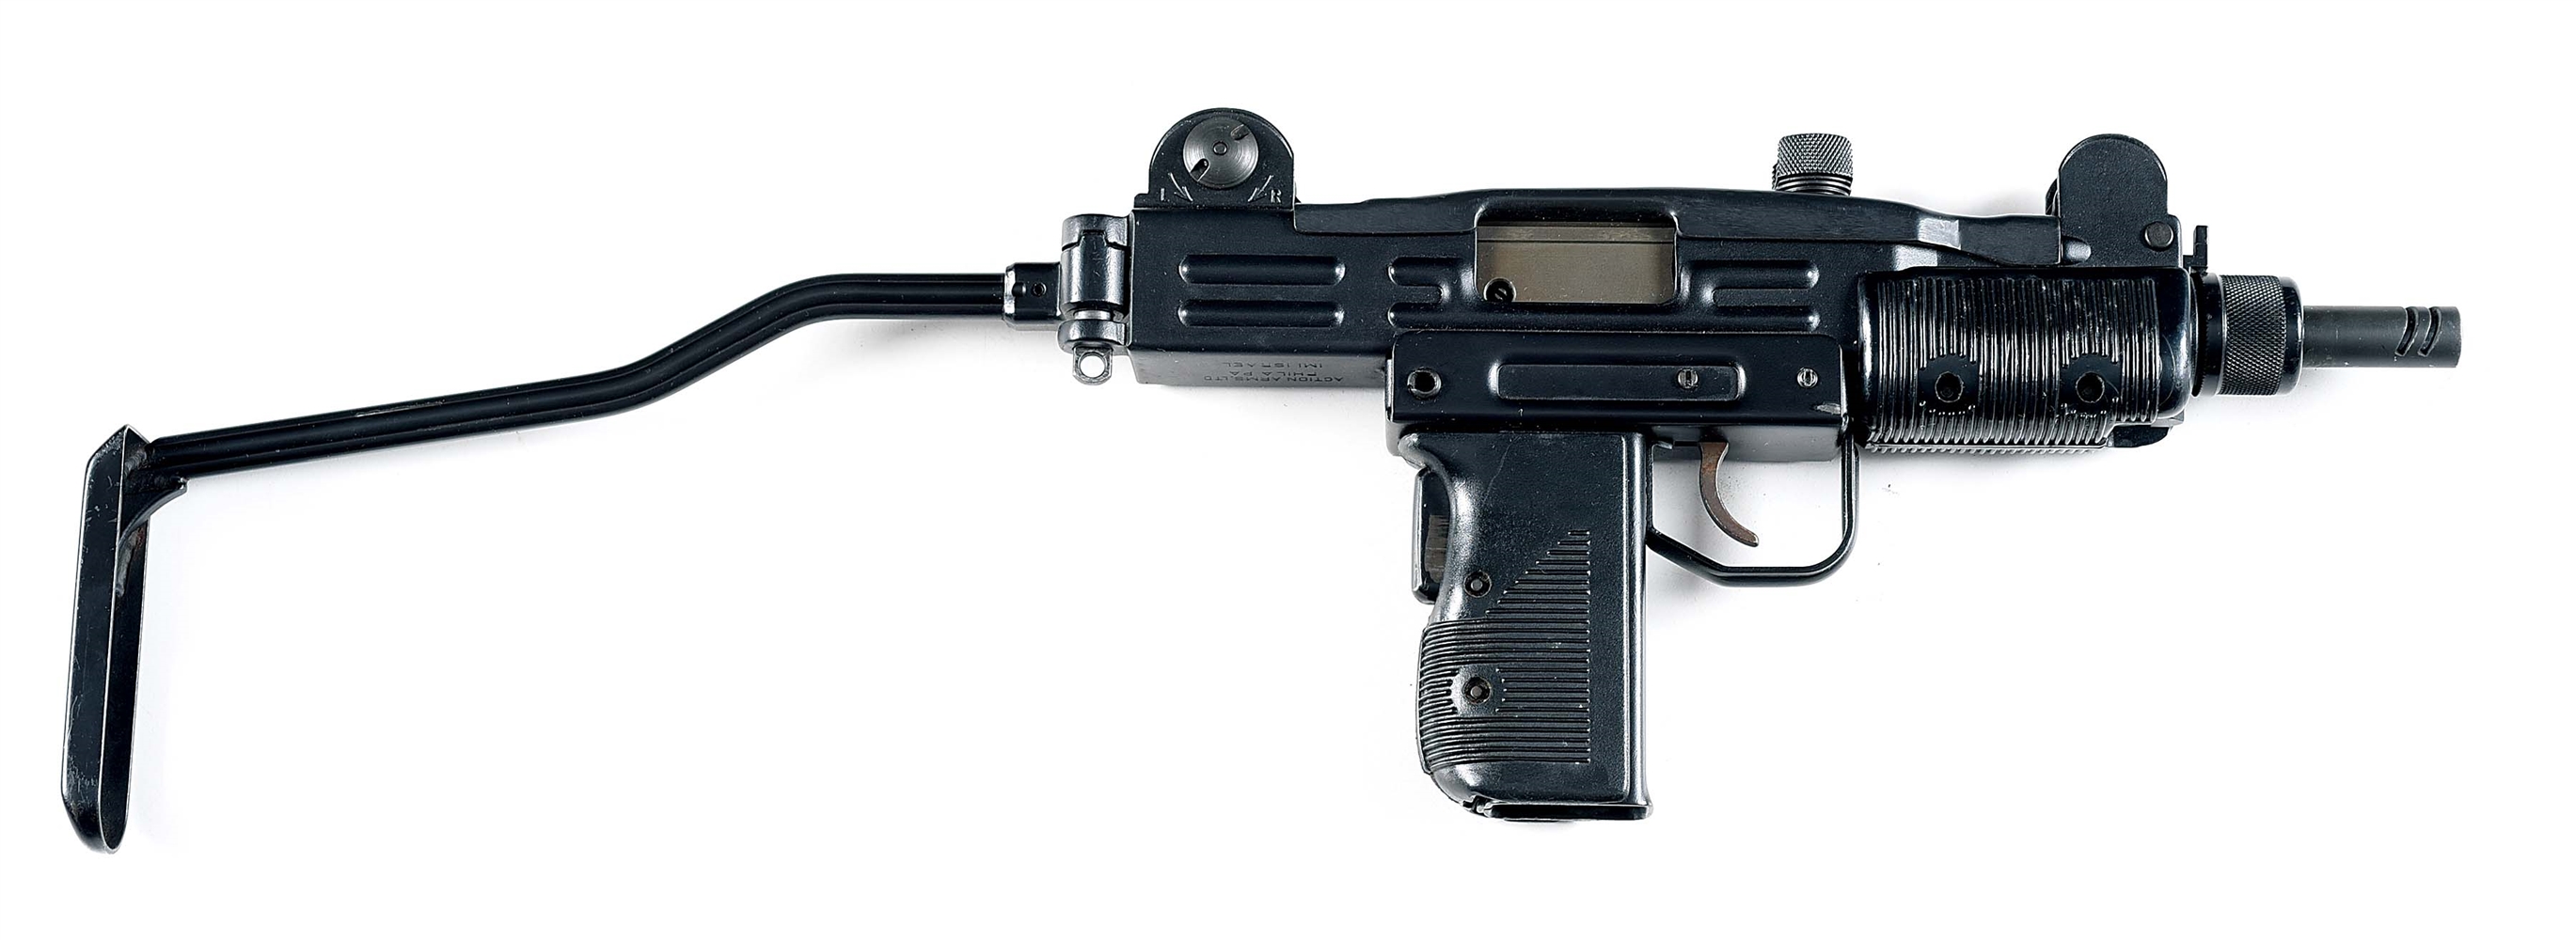 (N) ALWAYS DESIRABLE ACTION ARMS MINI-UZI MACHINE GUN (PRE-86 DEALER SAMPLE).